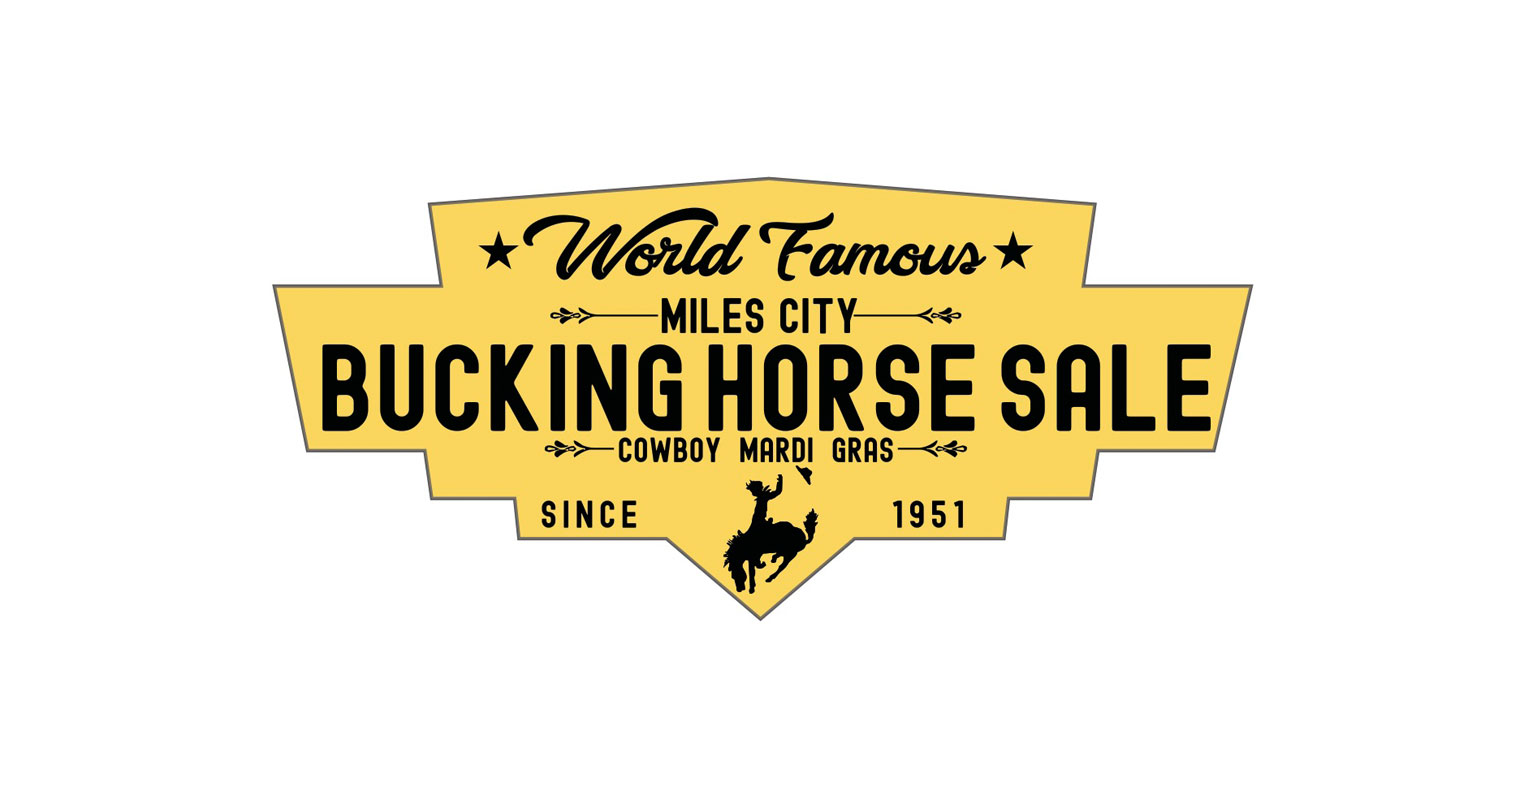 Miles City Bucking Horse Sale